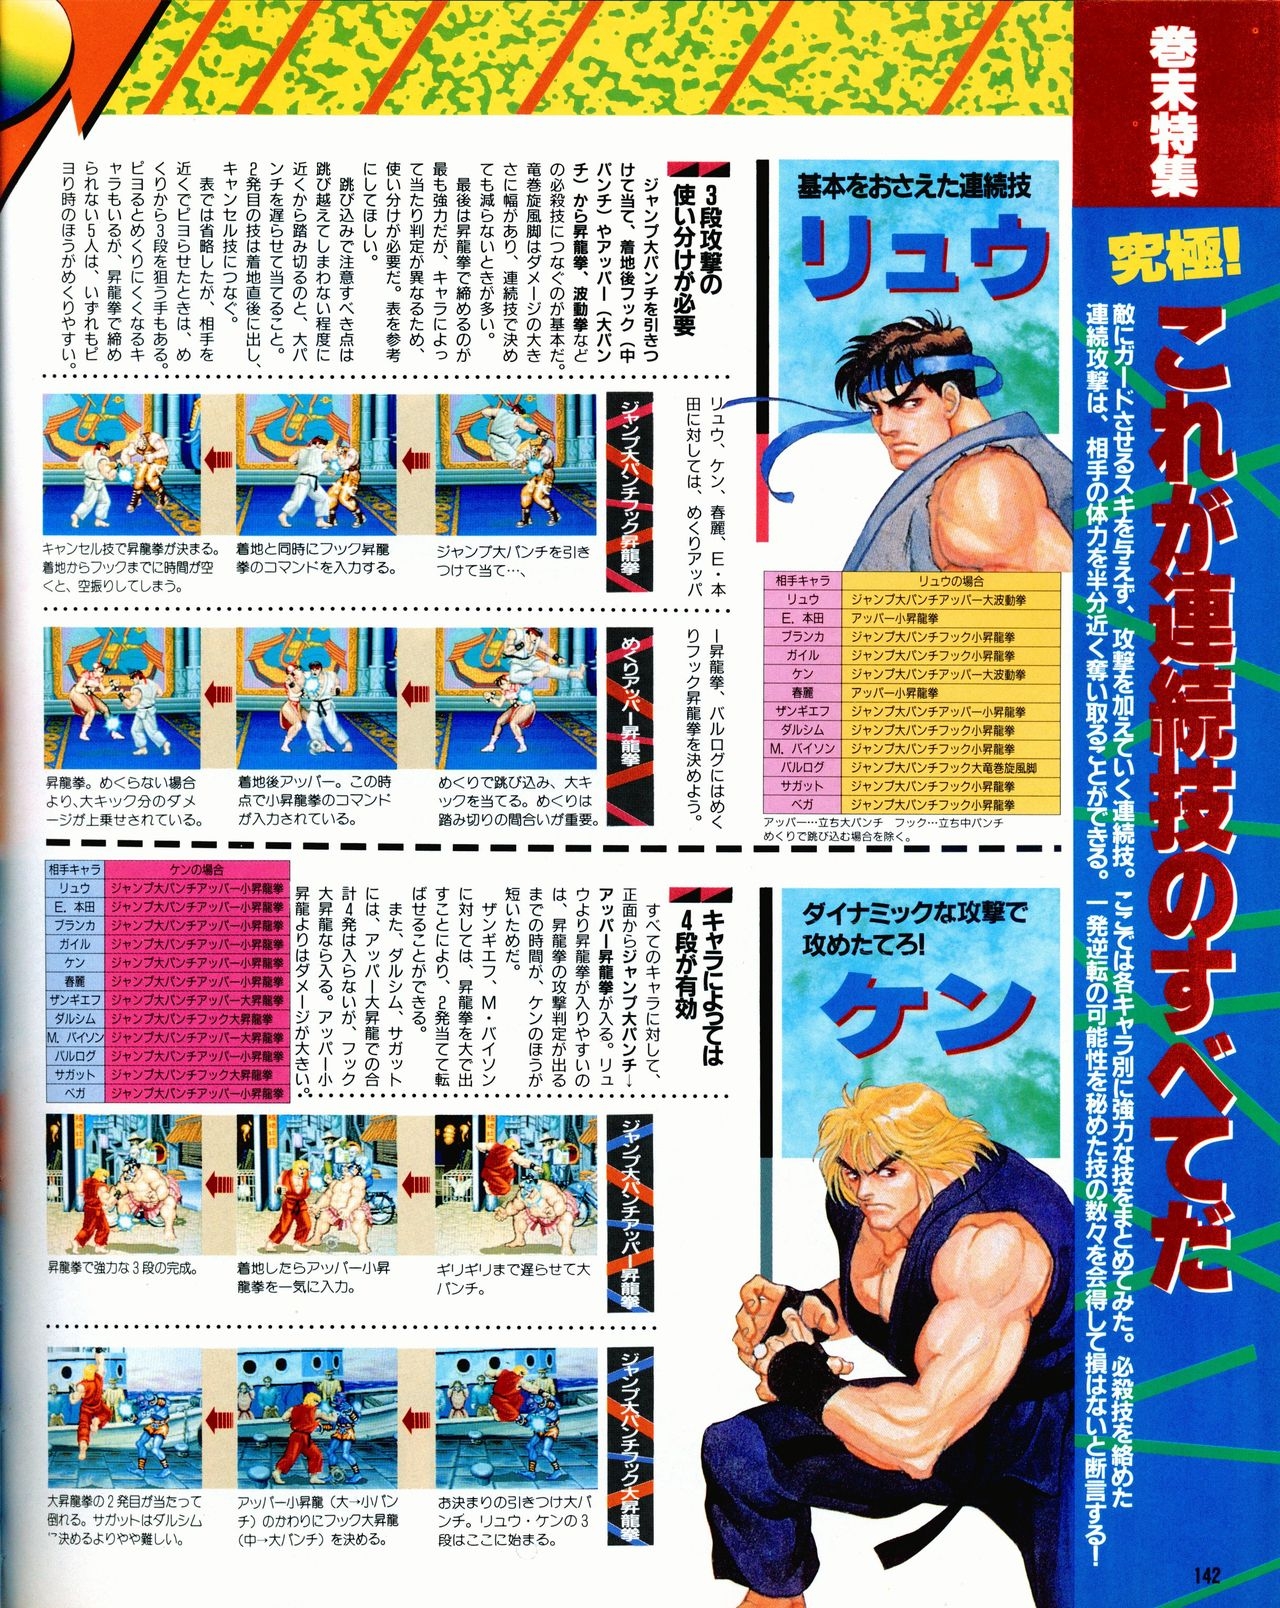 Street Fighter II Dash - Gamest special issue 77 143